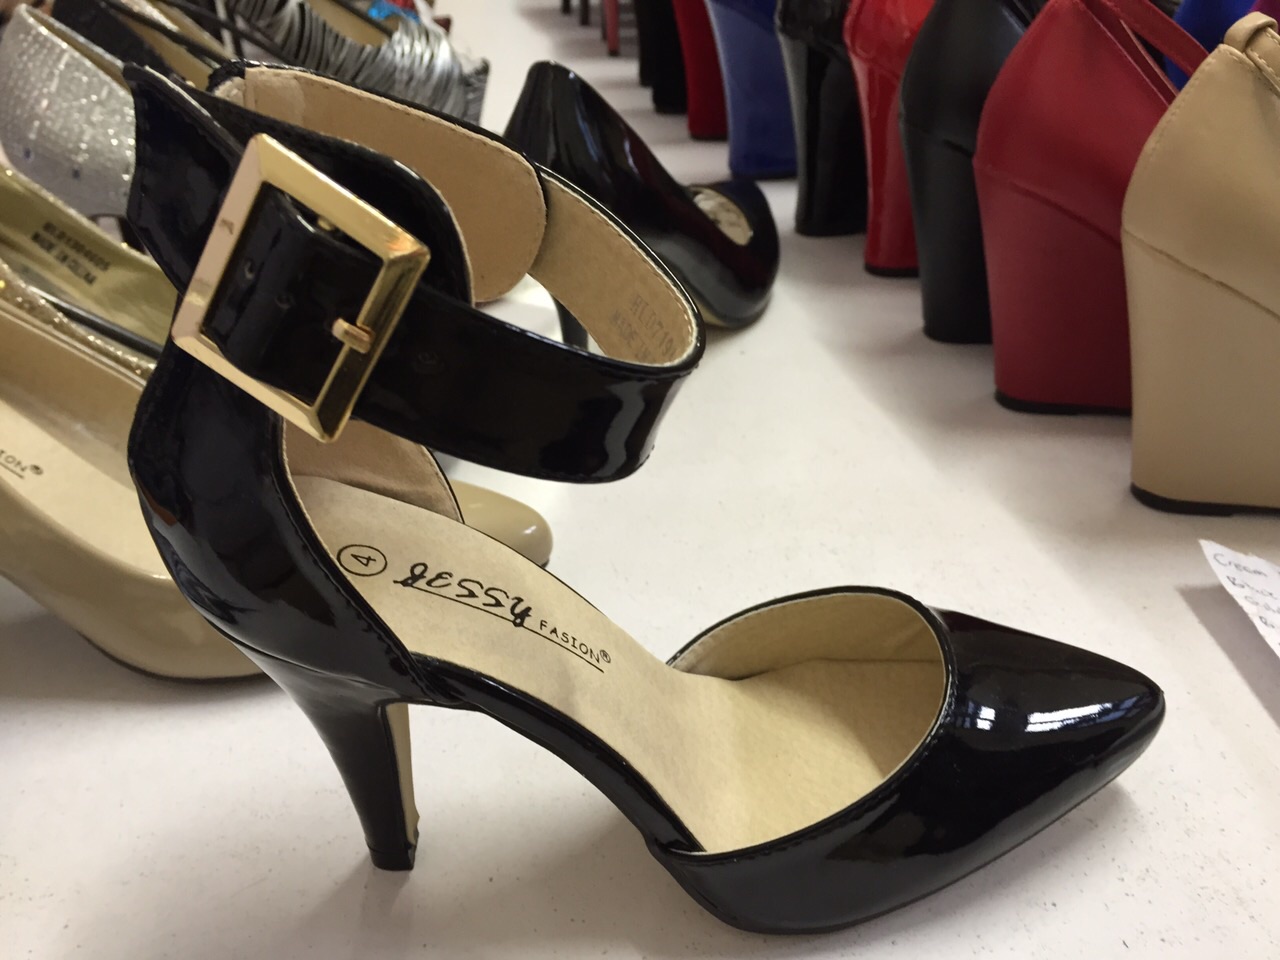 Black Classy Lady heels